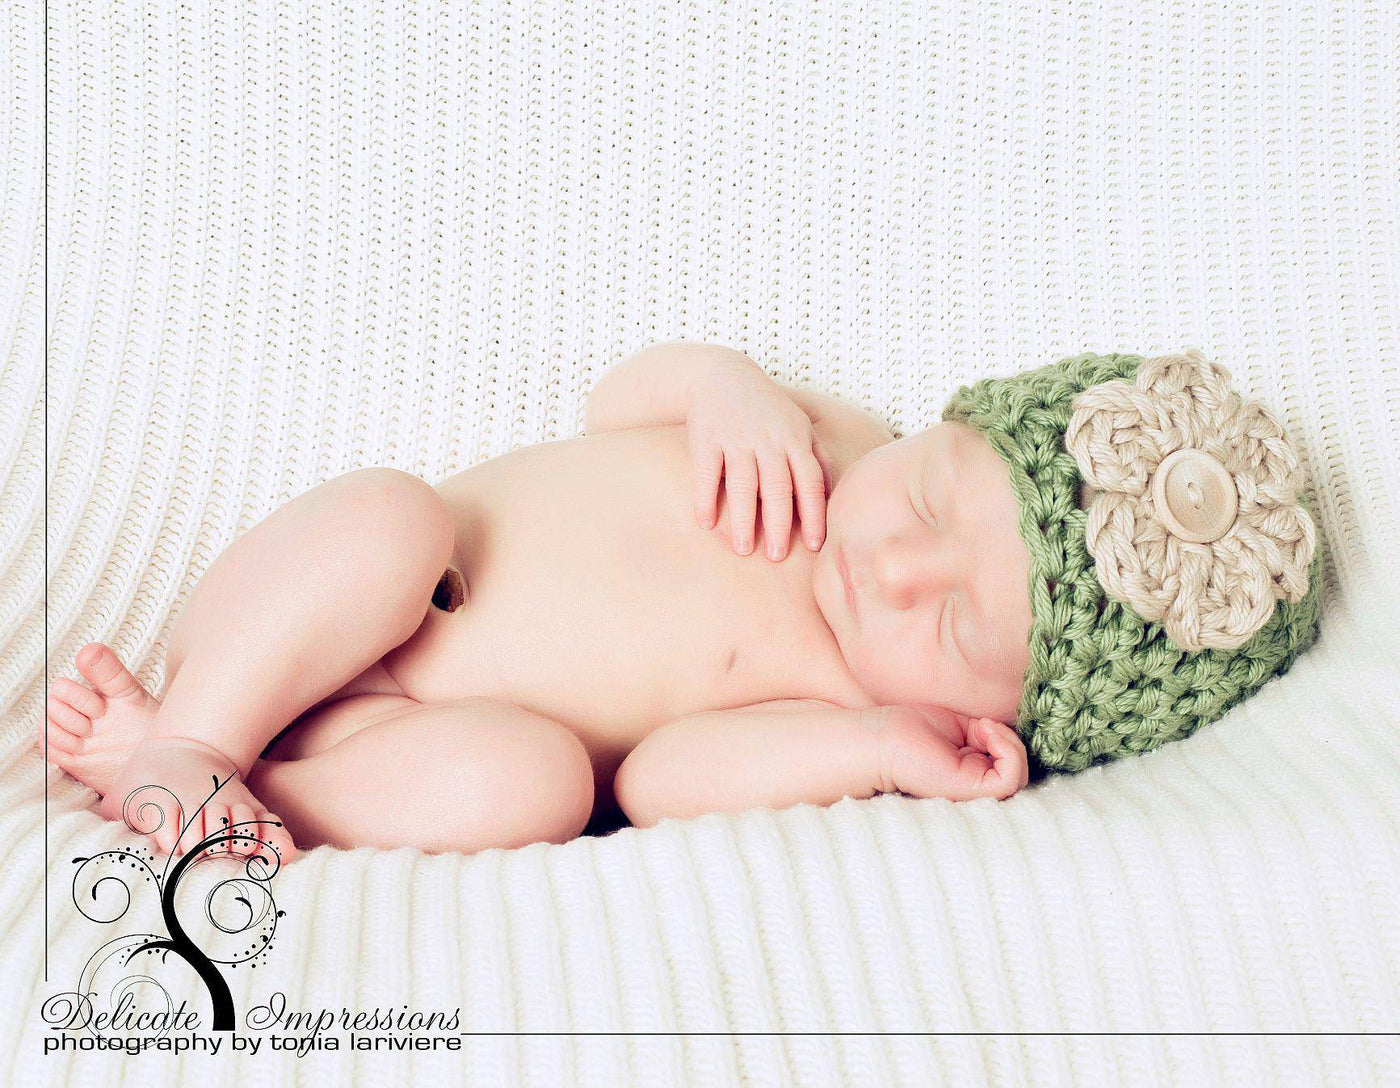 Vintage Green Newborn Beanie Hat - Beautiful Photo Props